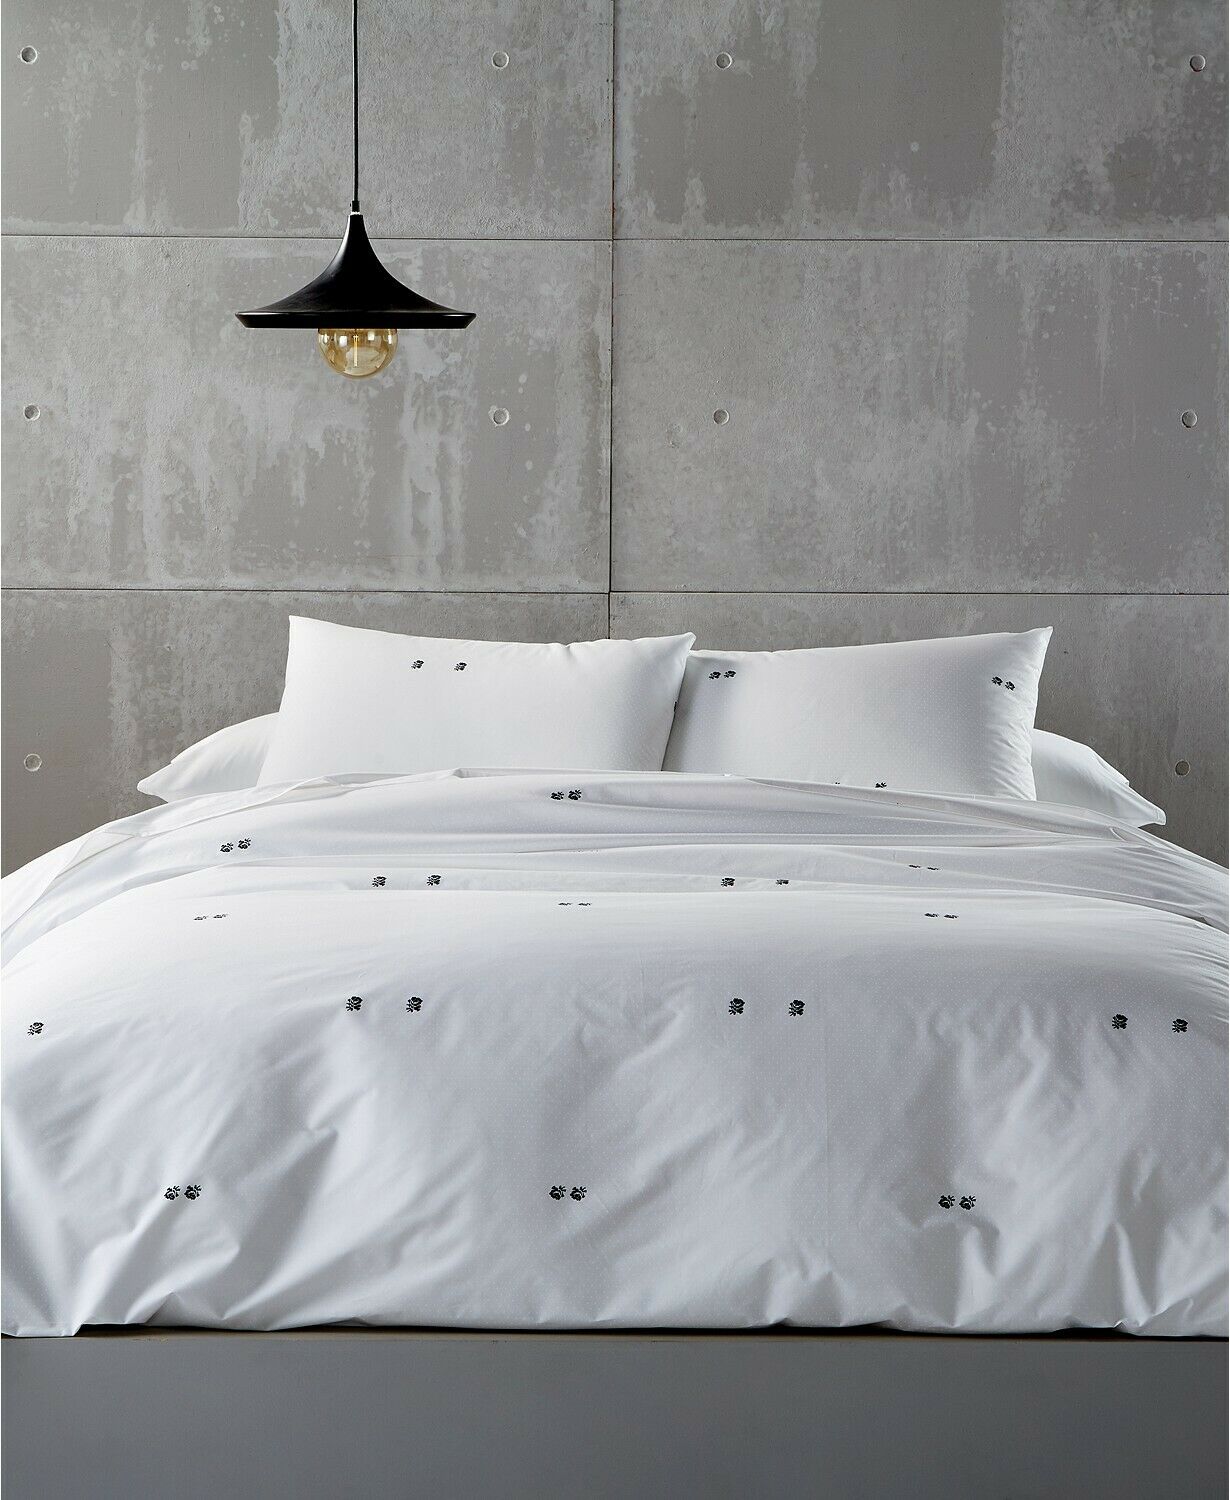 Calvin Klein Clone Floral Dot 100% Combed Cotton Comforter - QUEEN - White Black - image 1 of 4